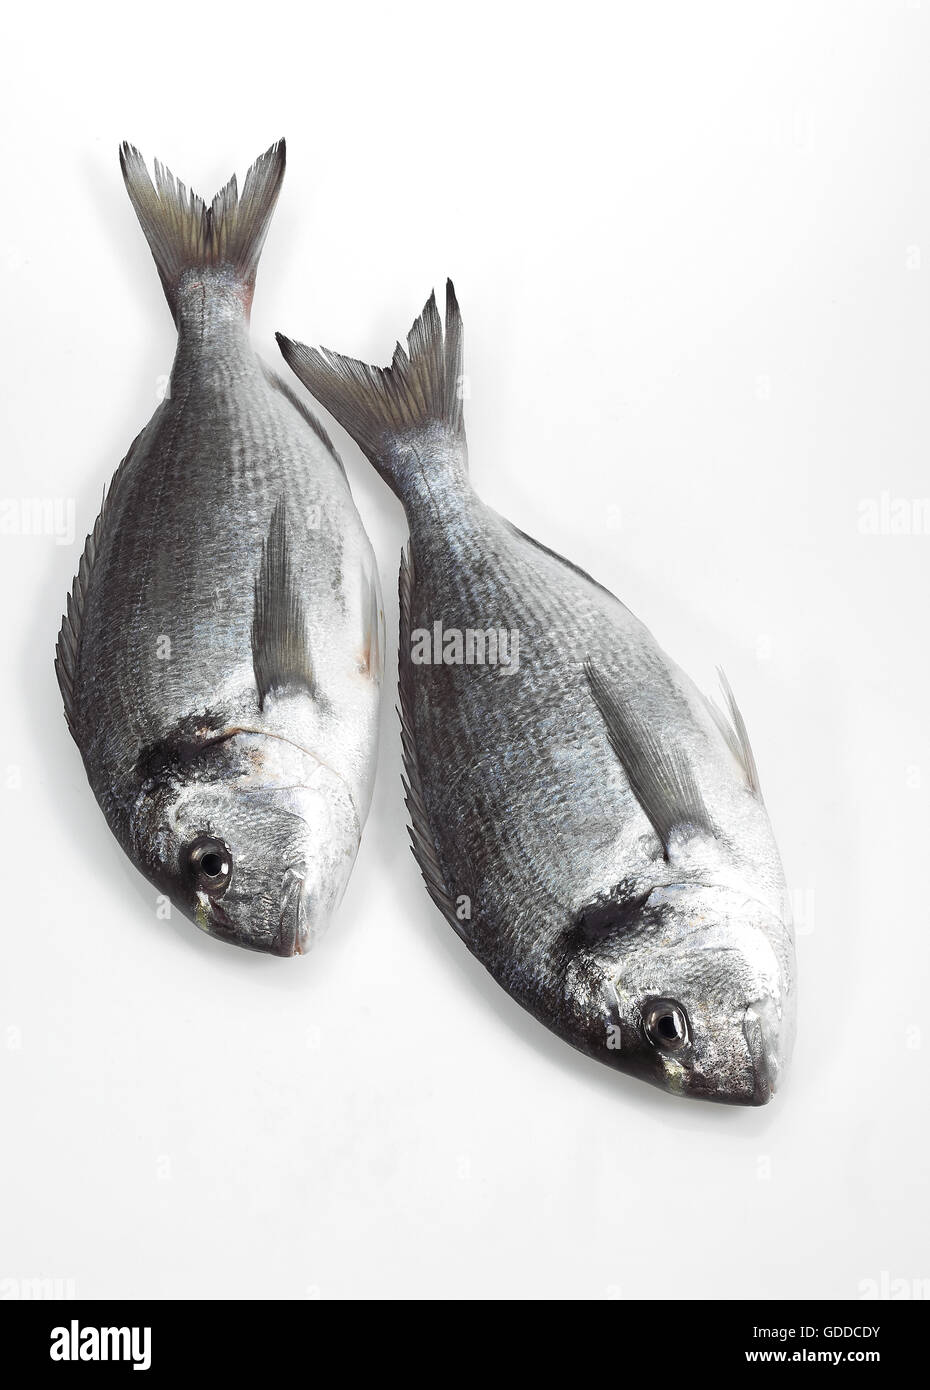 Gilthead Bream, sparus auratus, Fresh Fishes against White Background Stock Photo